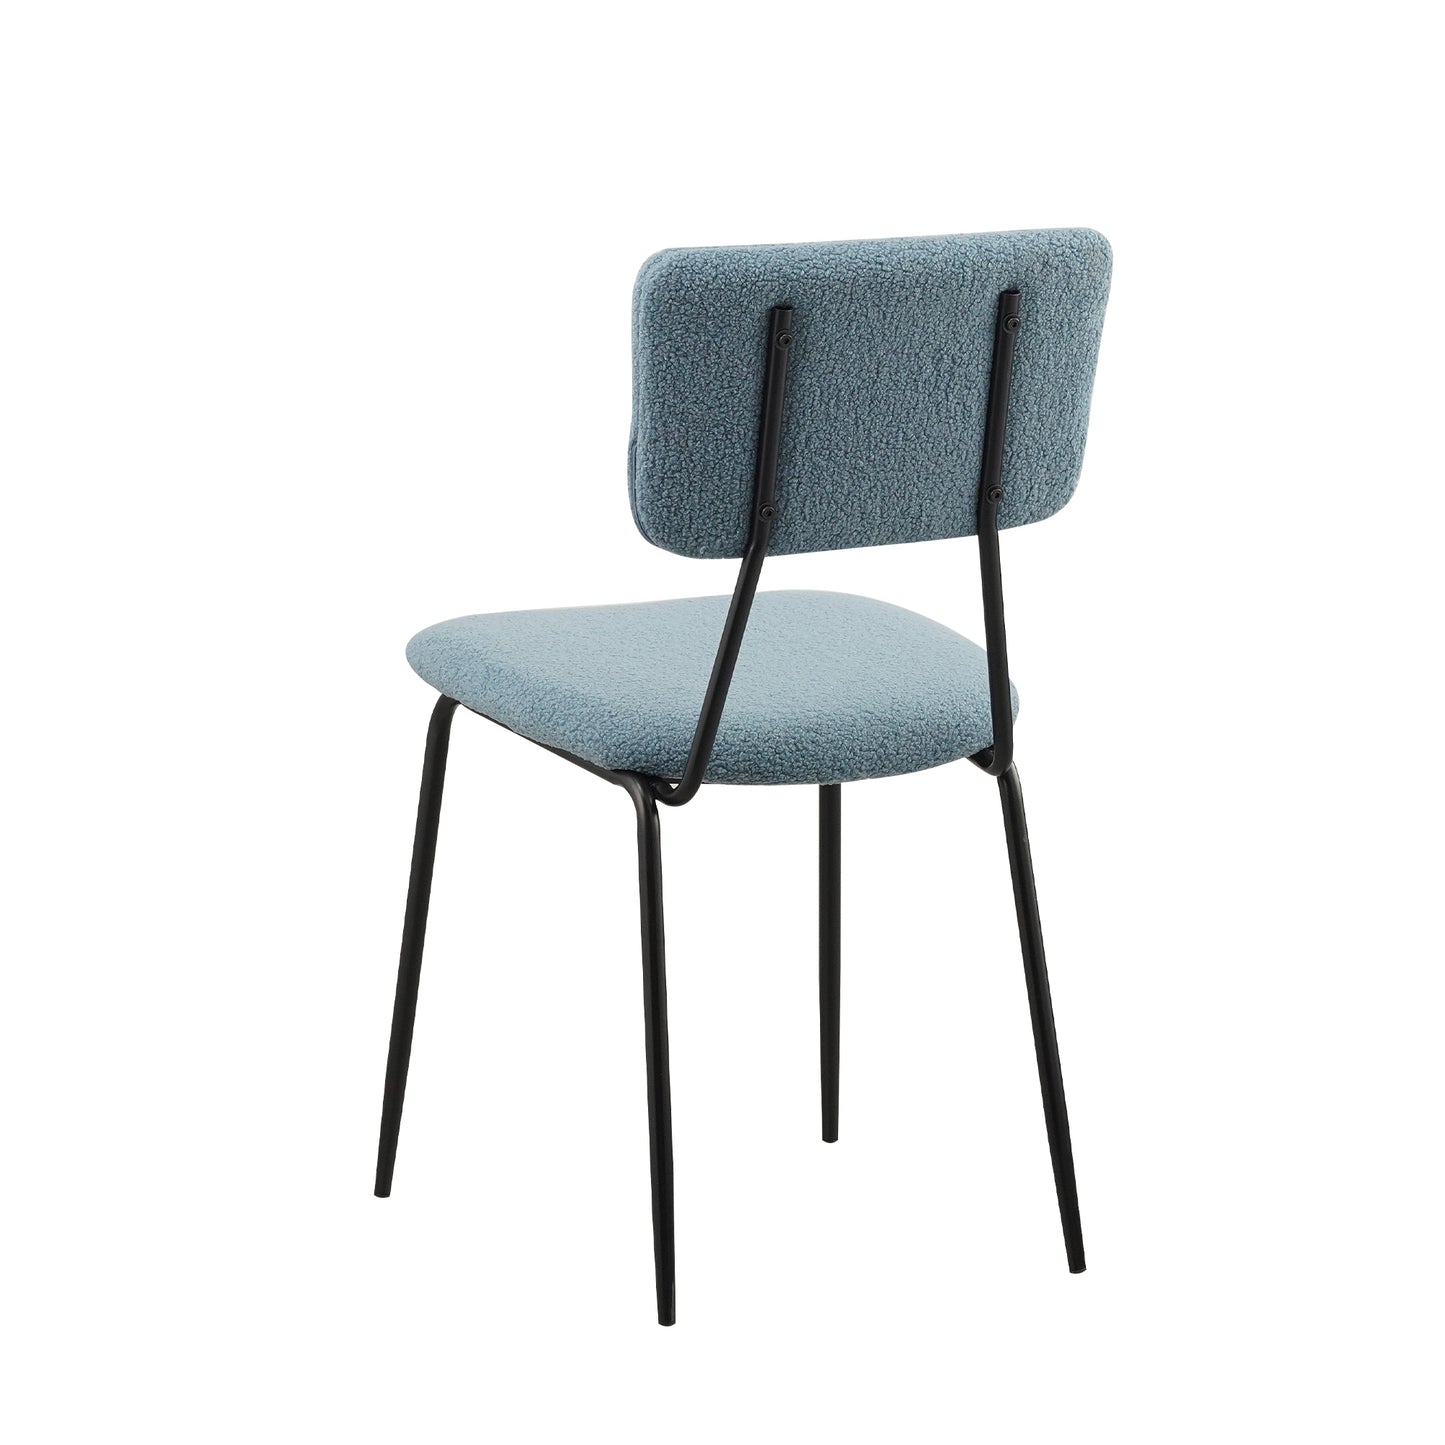 Plush Modern Dining Chairs - Set of 2